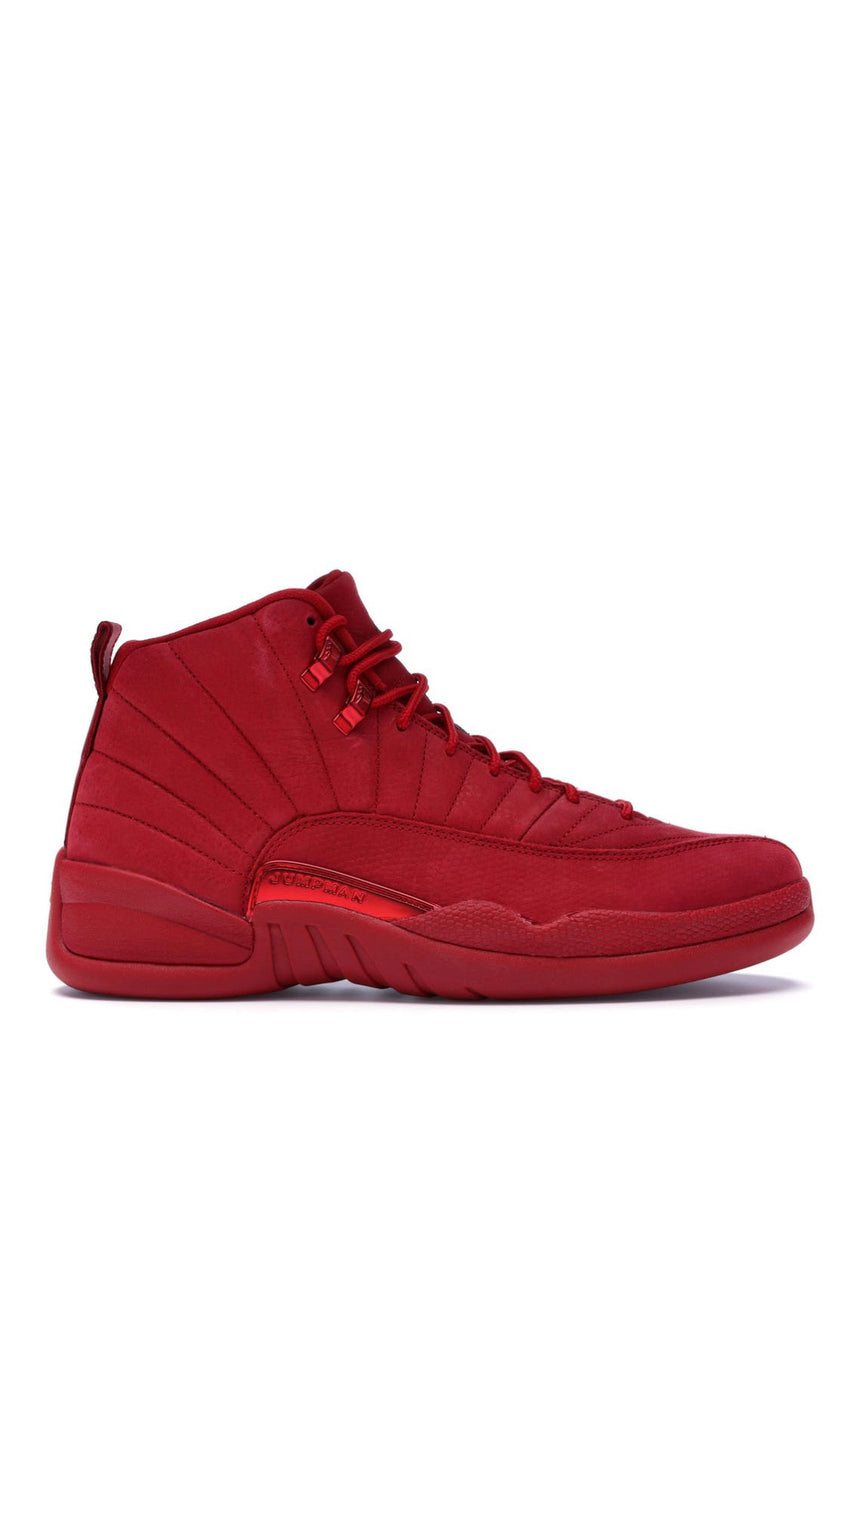 Jordan 12 Retro “Gym Red”